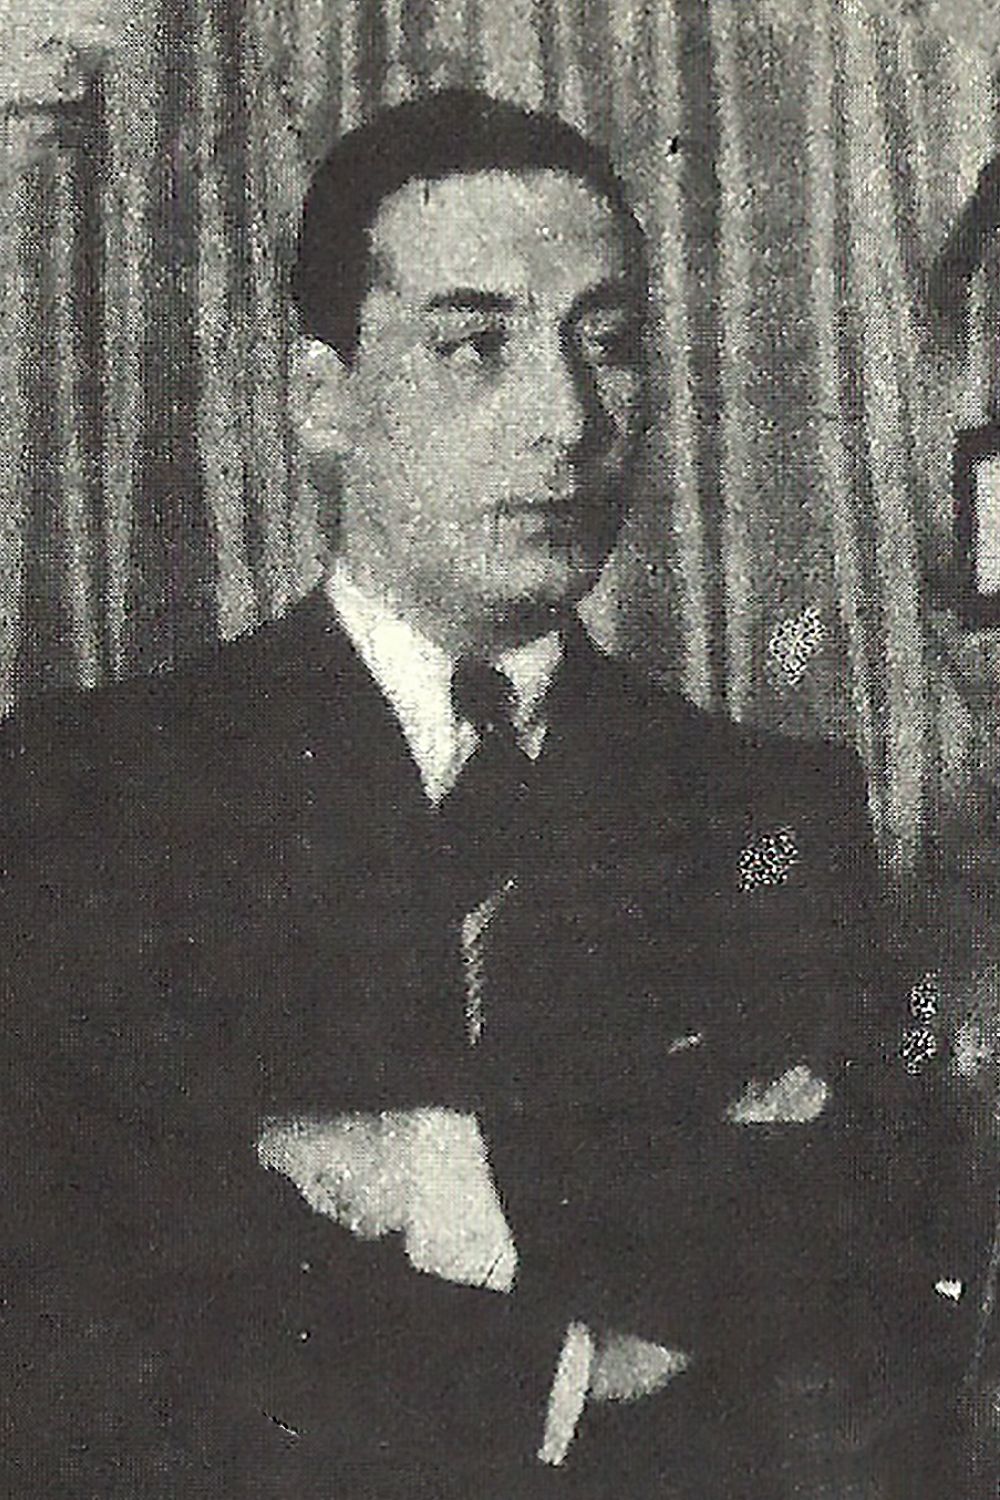 Roberto Miro, Argentine Tango lyricist.